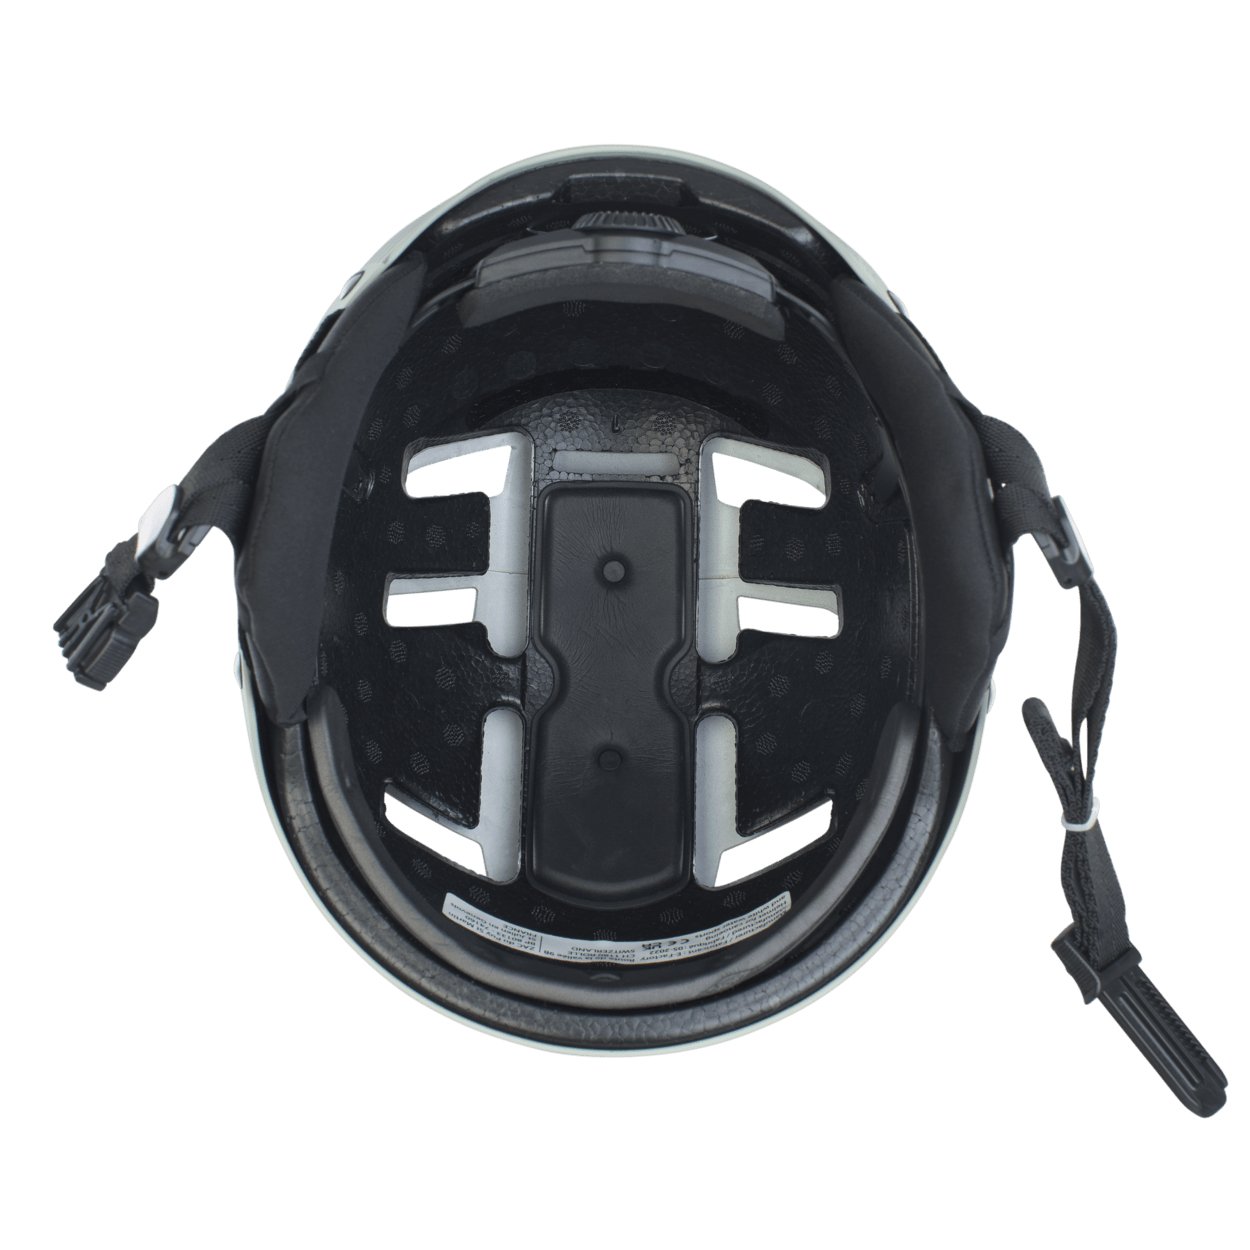 ION Slash Amp Helmet 2023 - Worthing Watersports - 9010583134901 - Protection - ION Water